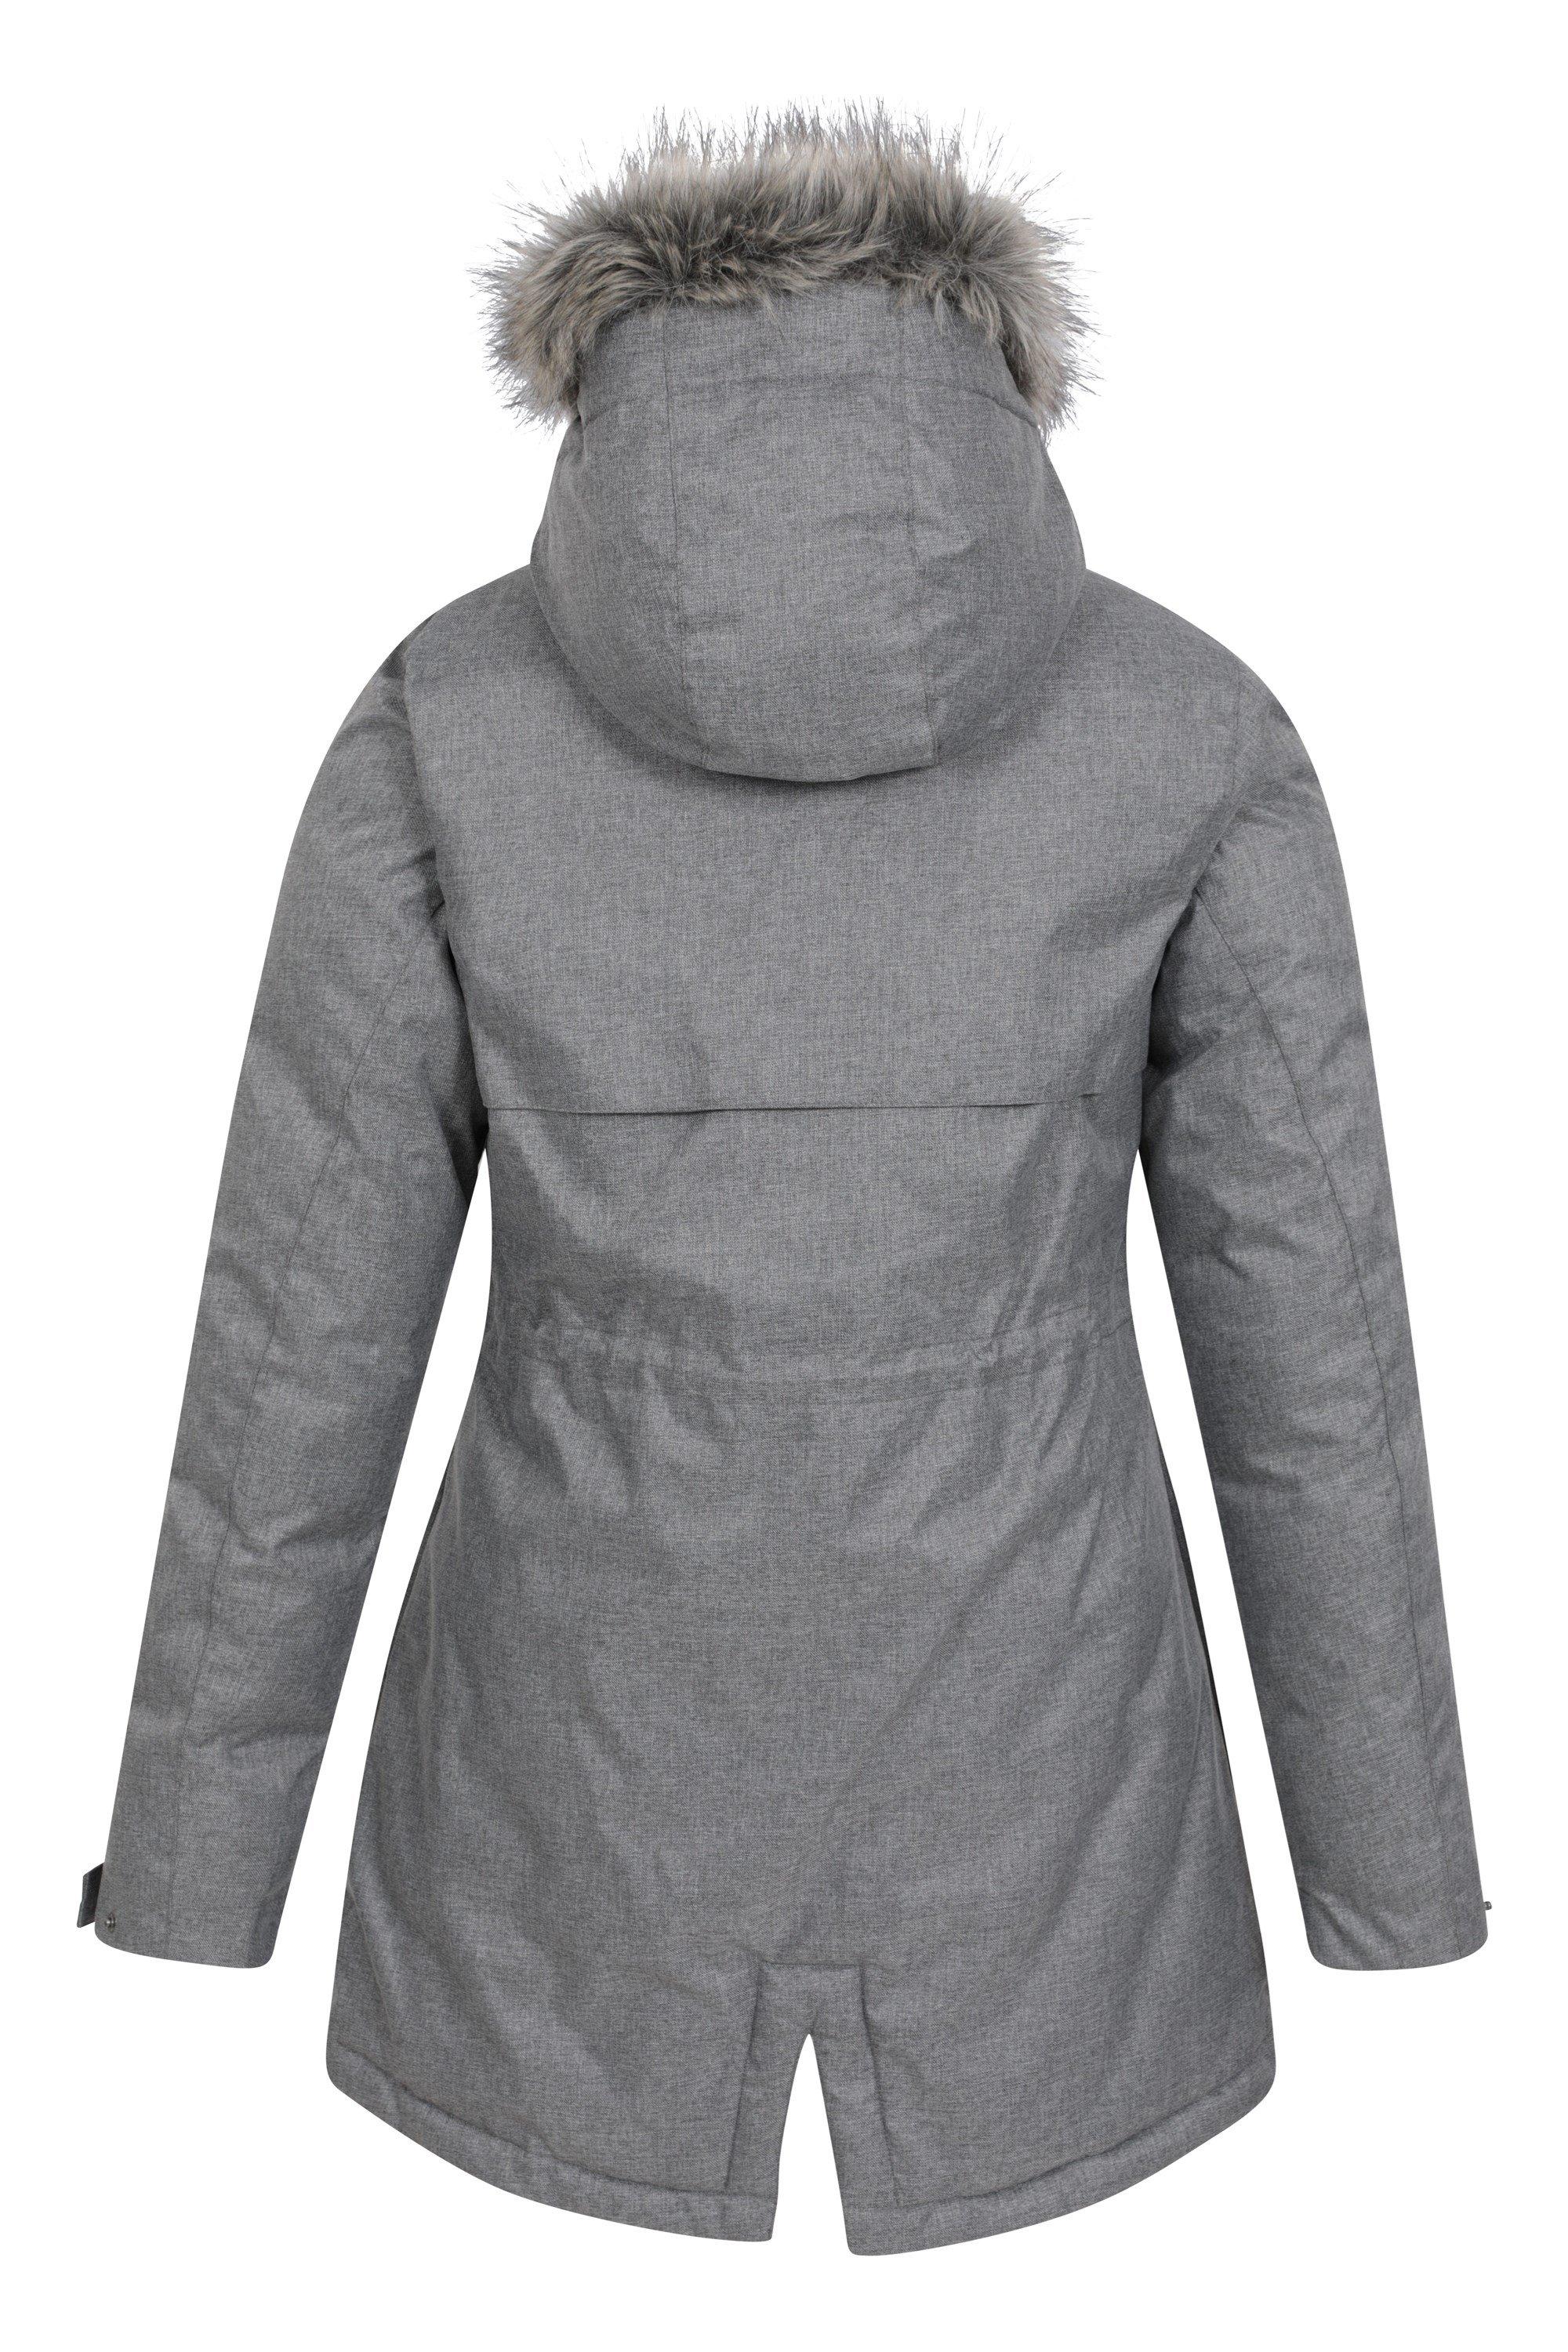 Mountain Warehouse Flare Parka Womens Jacket - Ladies Winter Coat